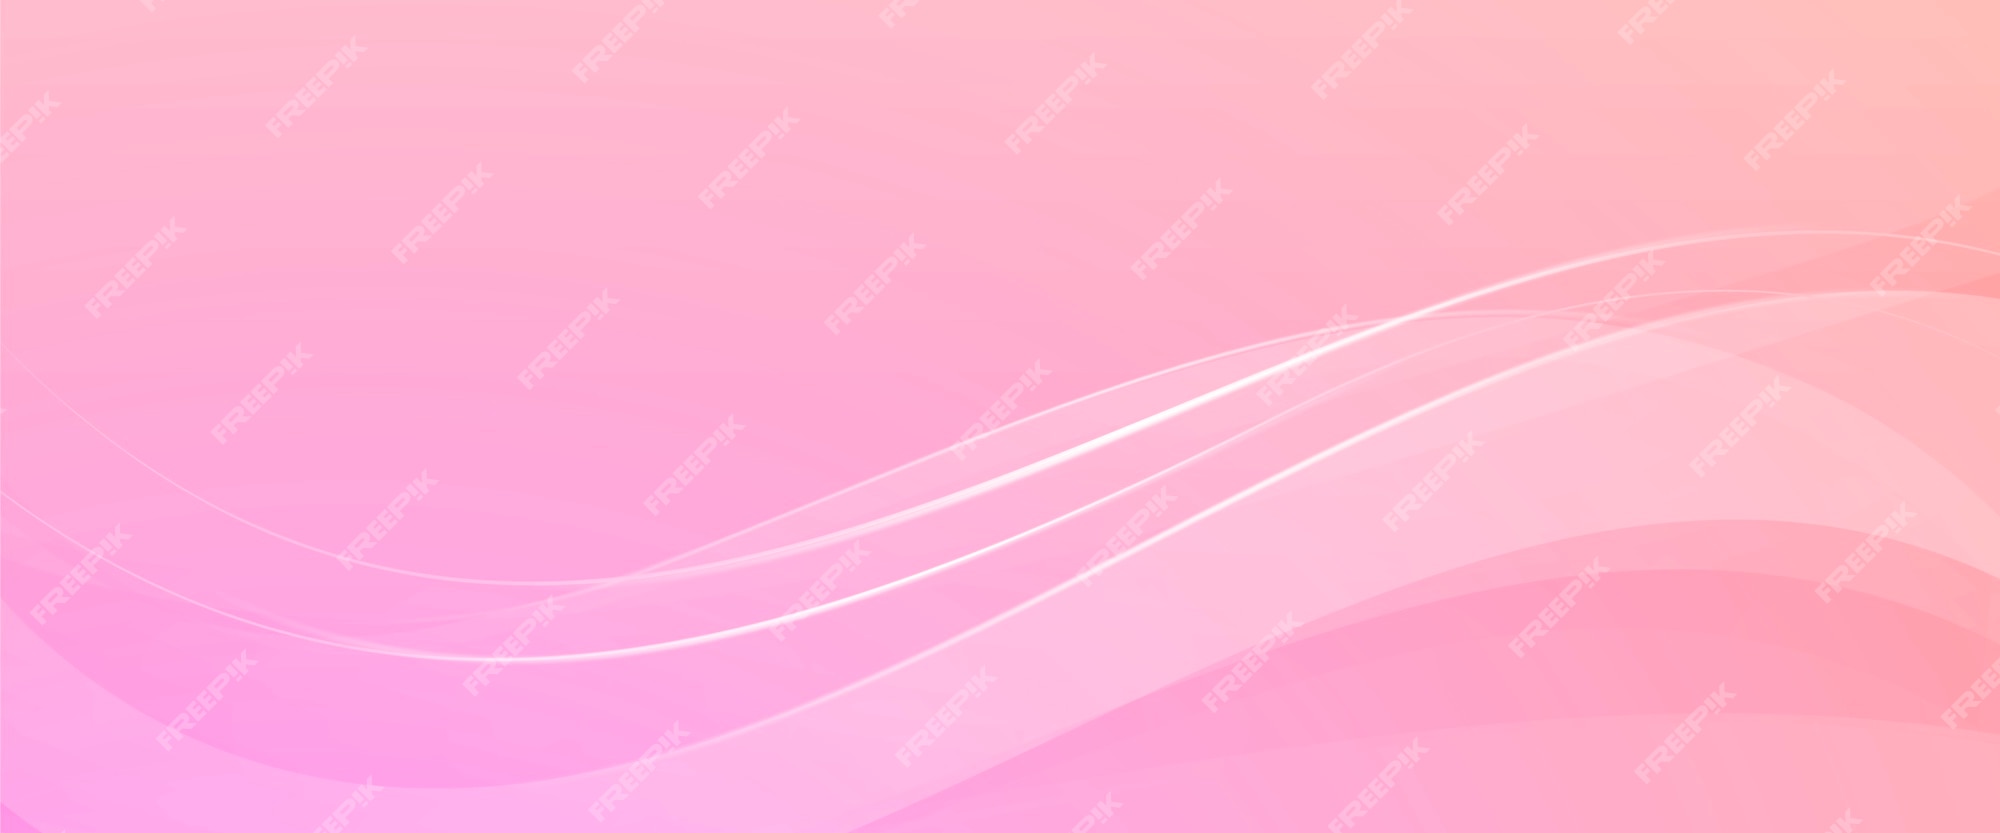 Pink Background Images - Free Download on Freepik